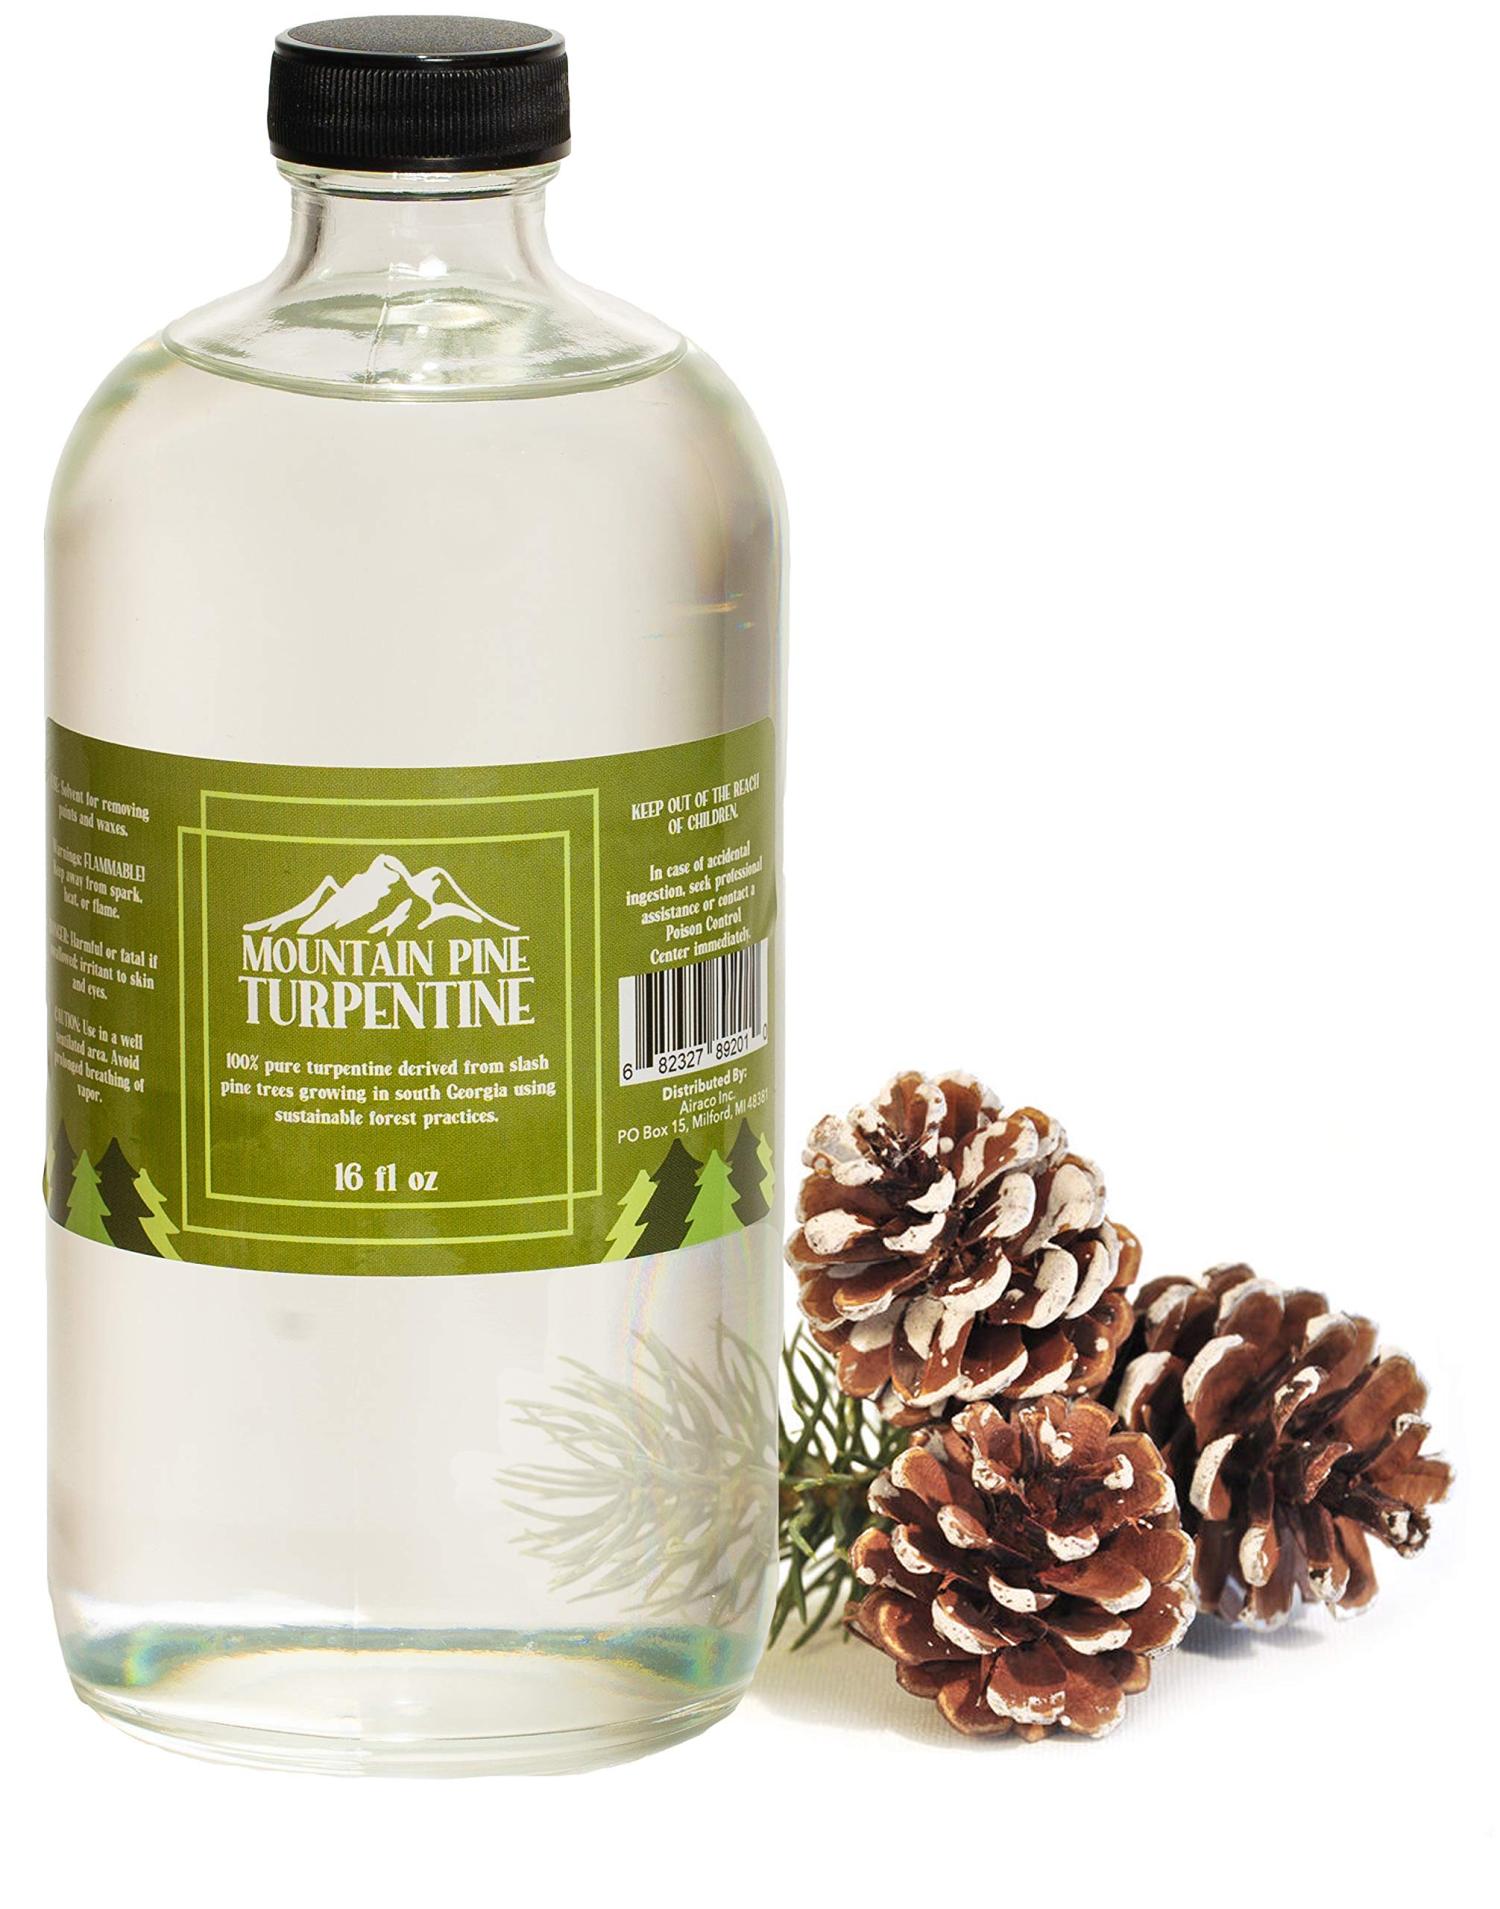 Camlin Turpentine Oil 100 ml. Bottle – VJBros